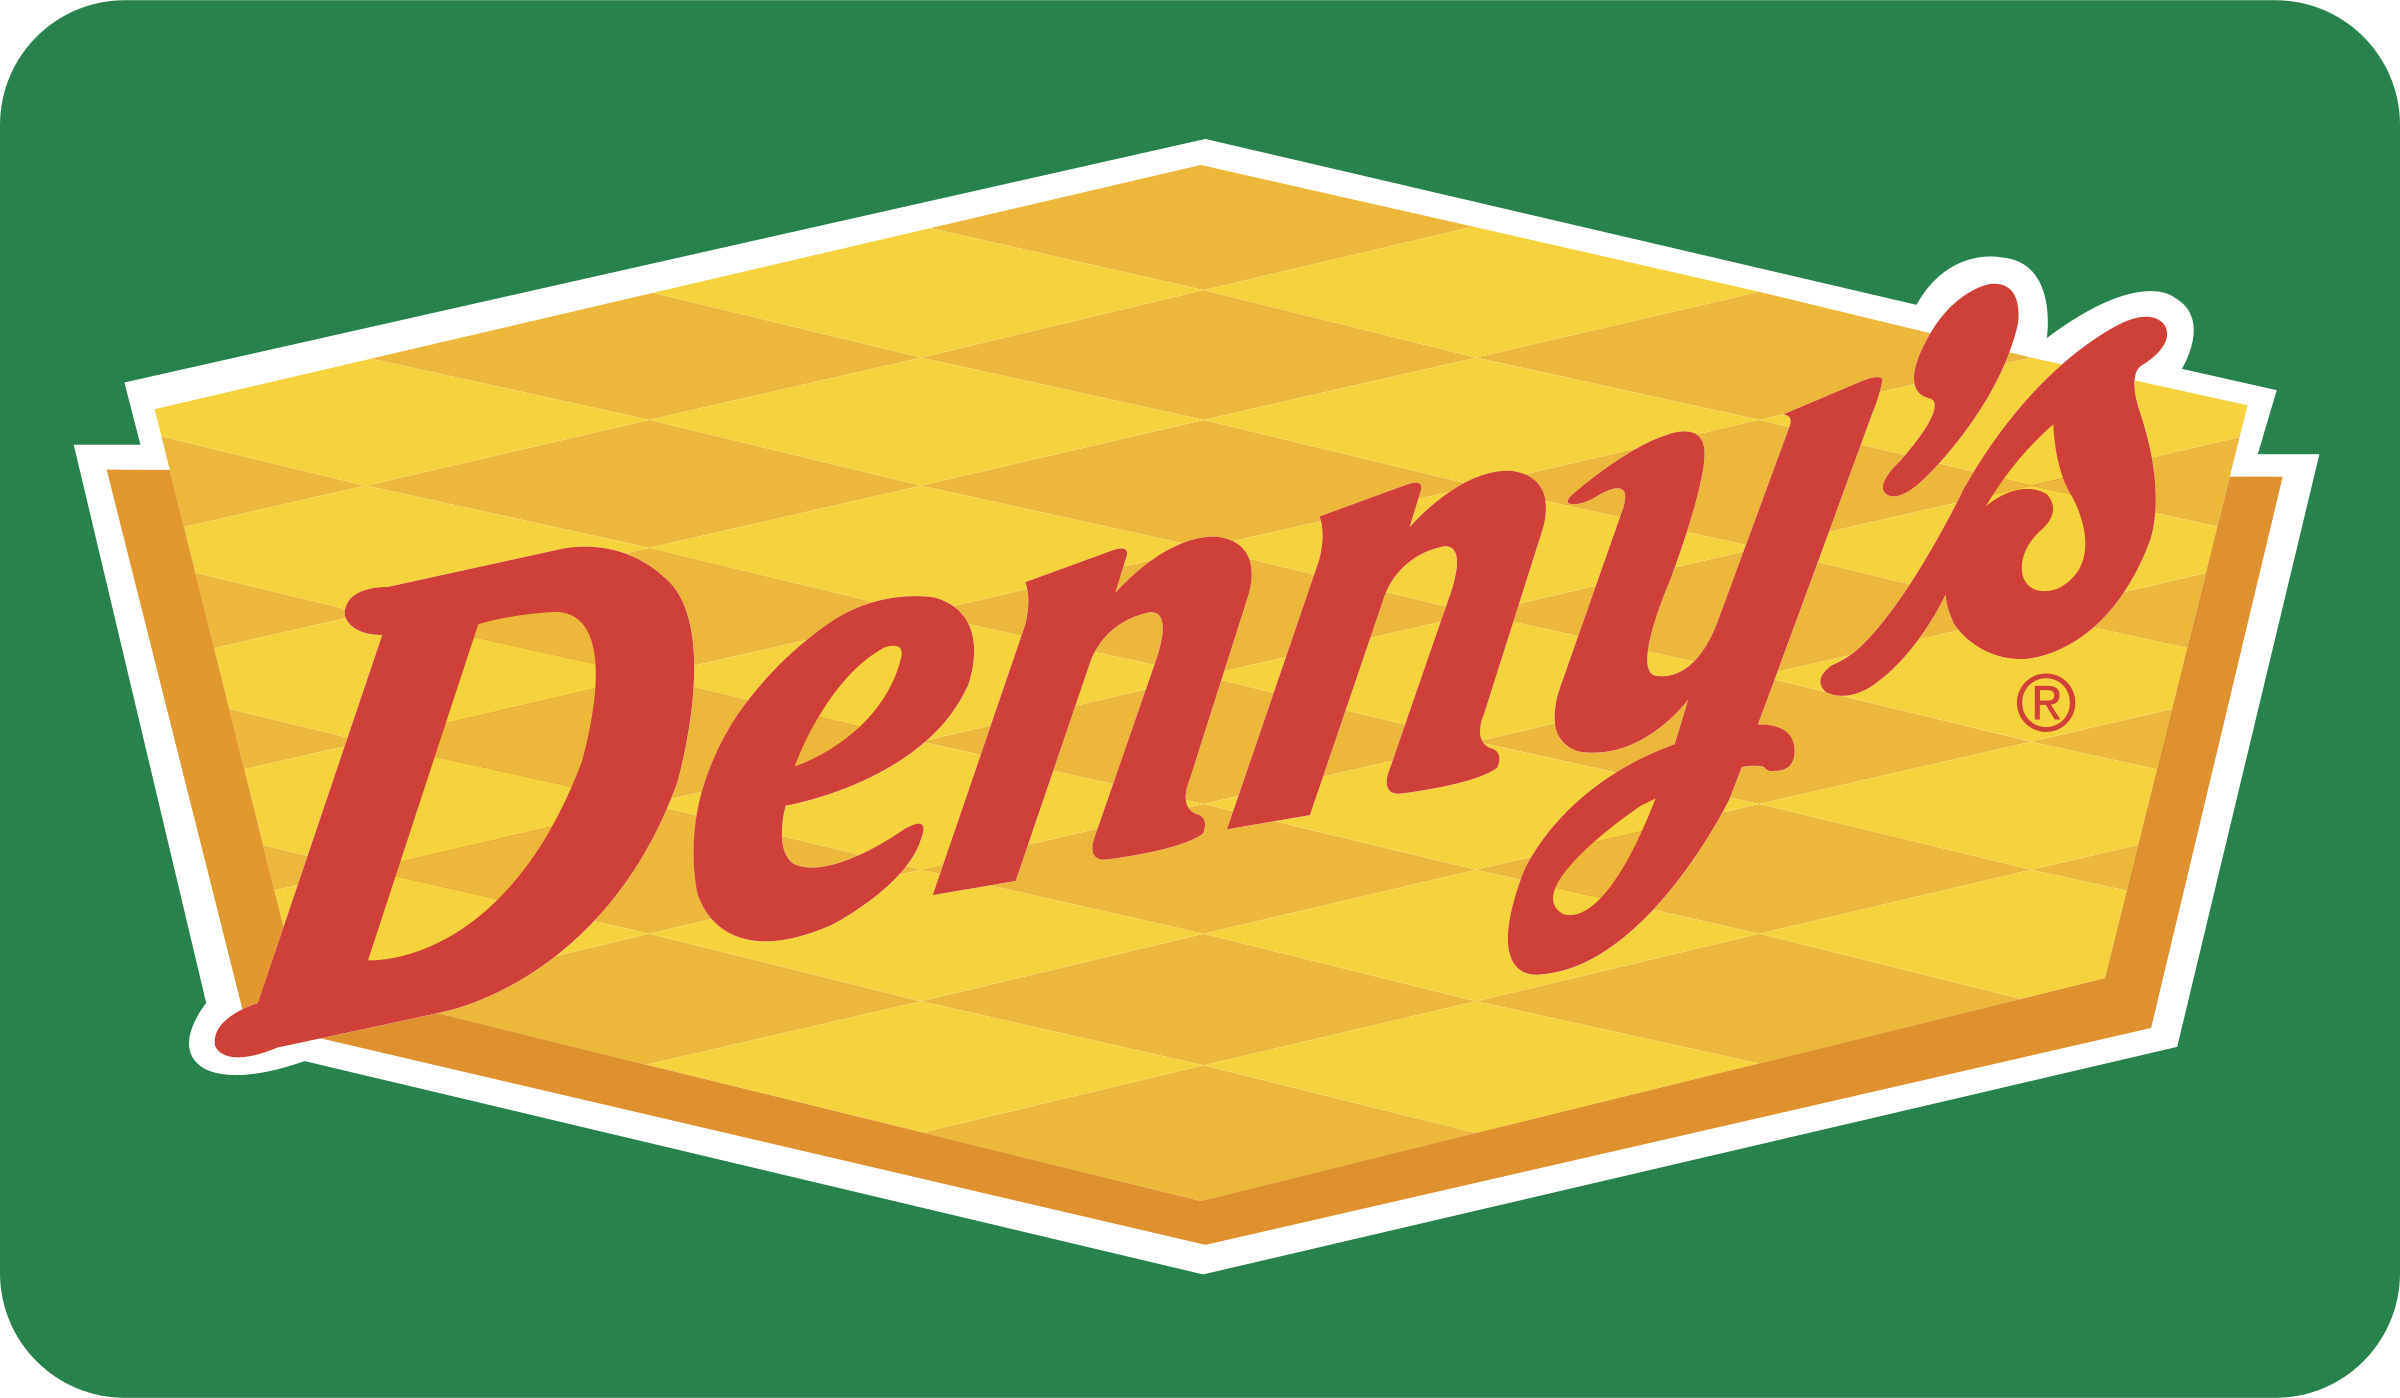 Denny's Logo - Denny's Logo PNG Transparent & SVG Vector - Freebie Supply